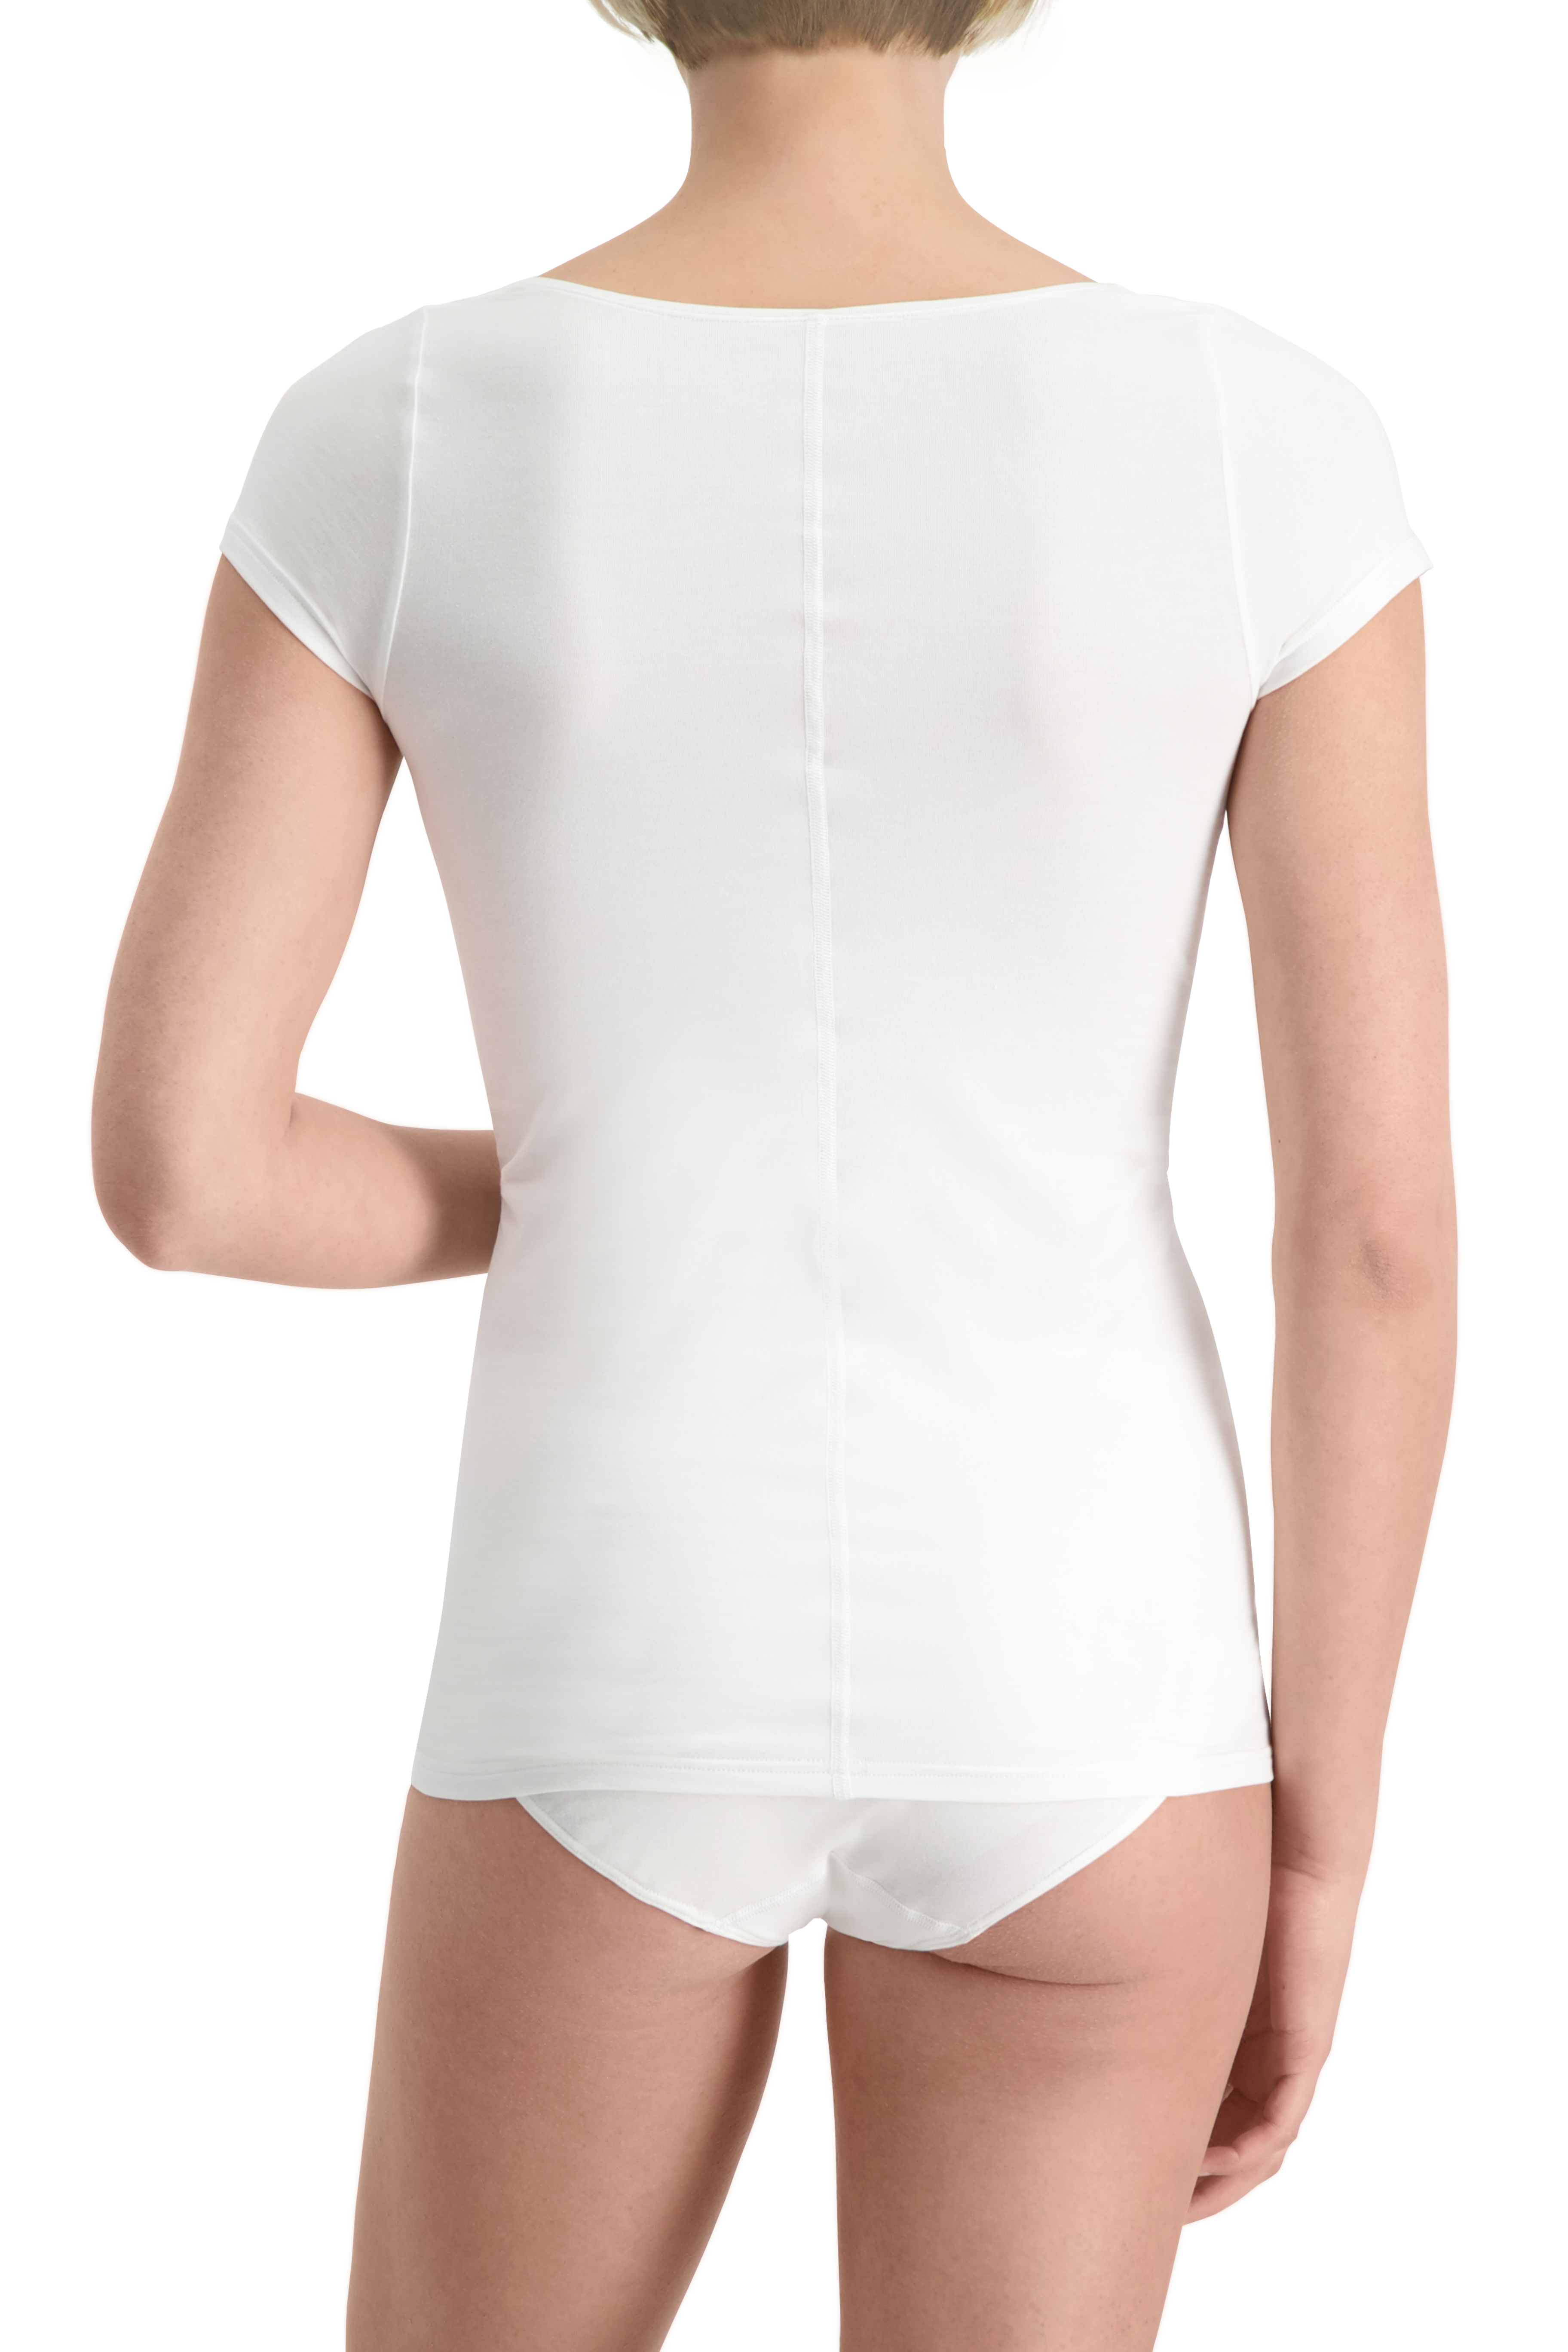 Invisible short women - for sleeve Noshirt undershirt